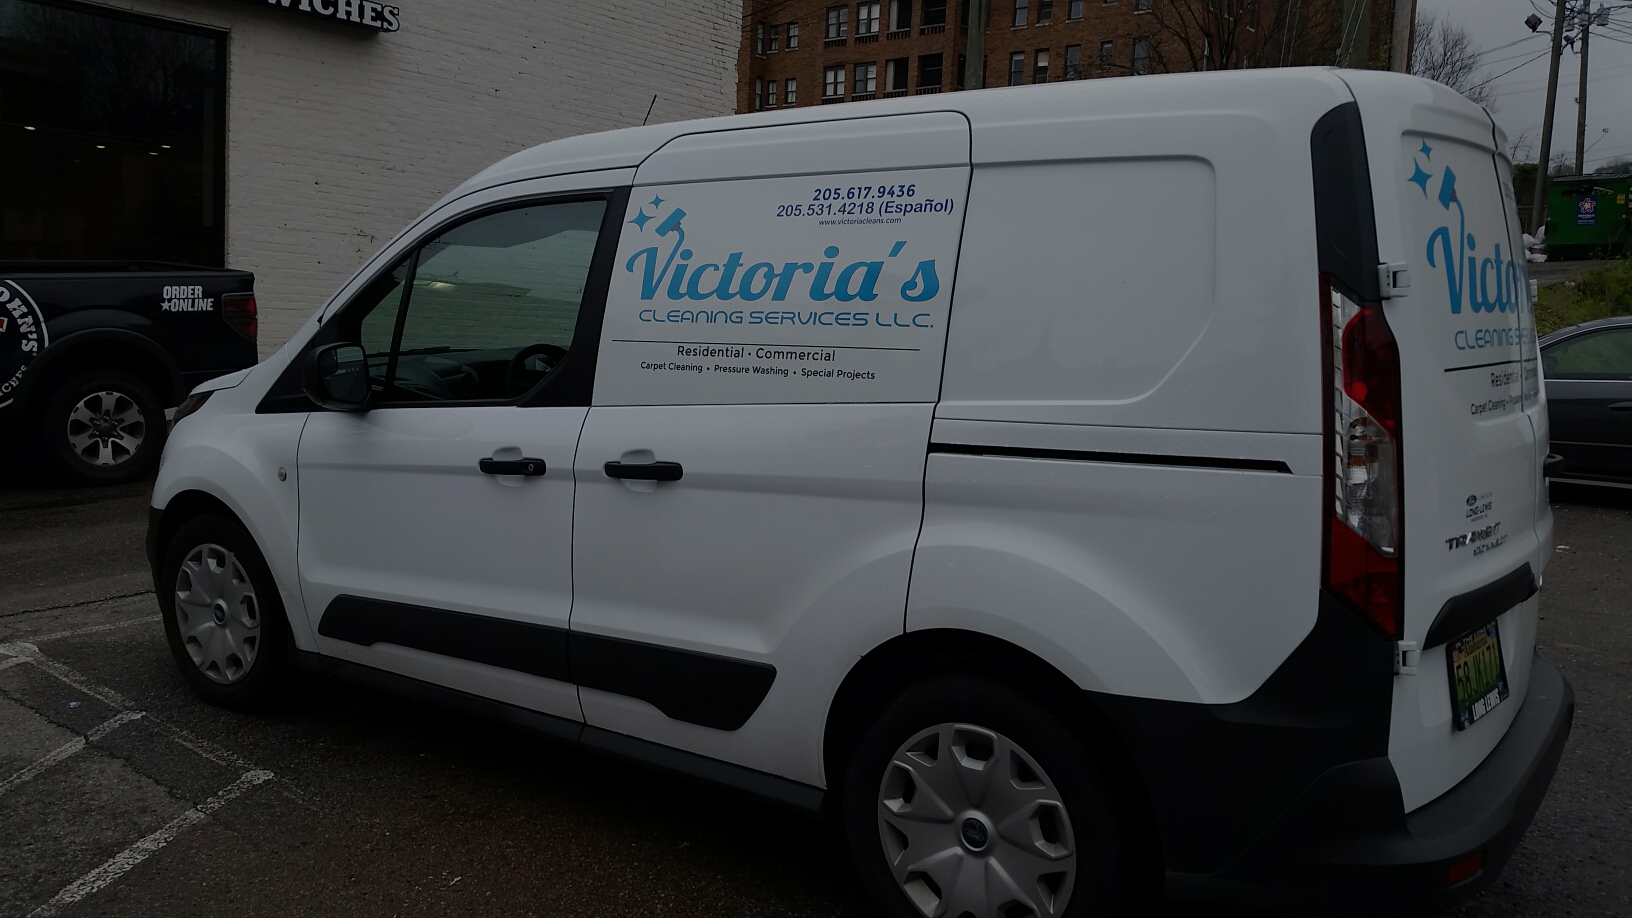 Victoria's Cleaning Services LLC Van